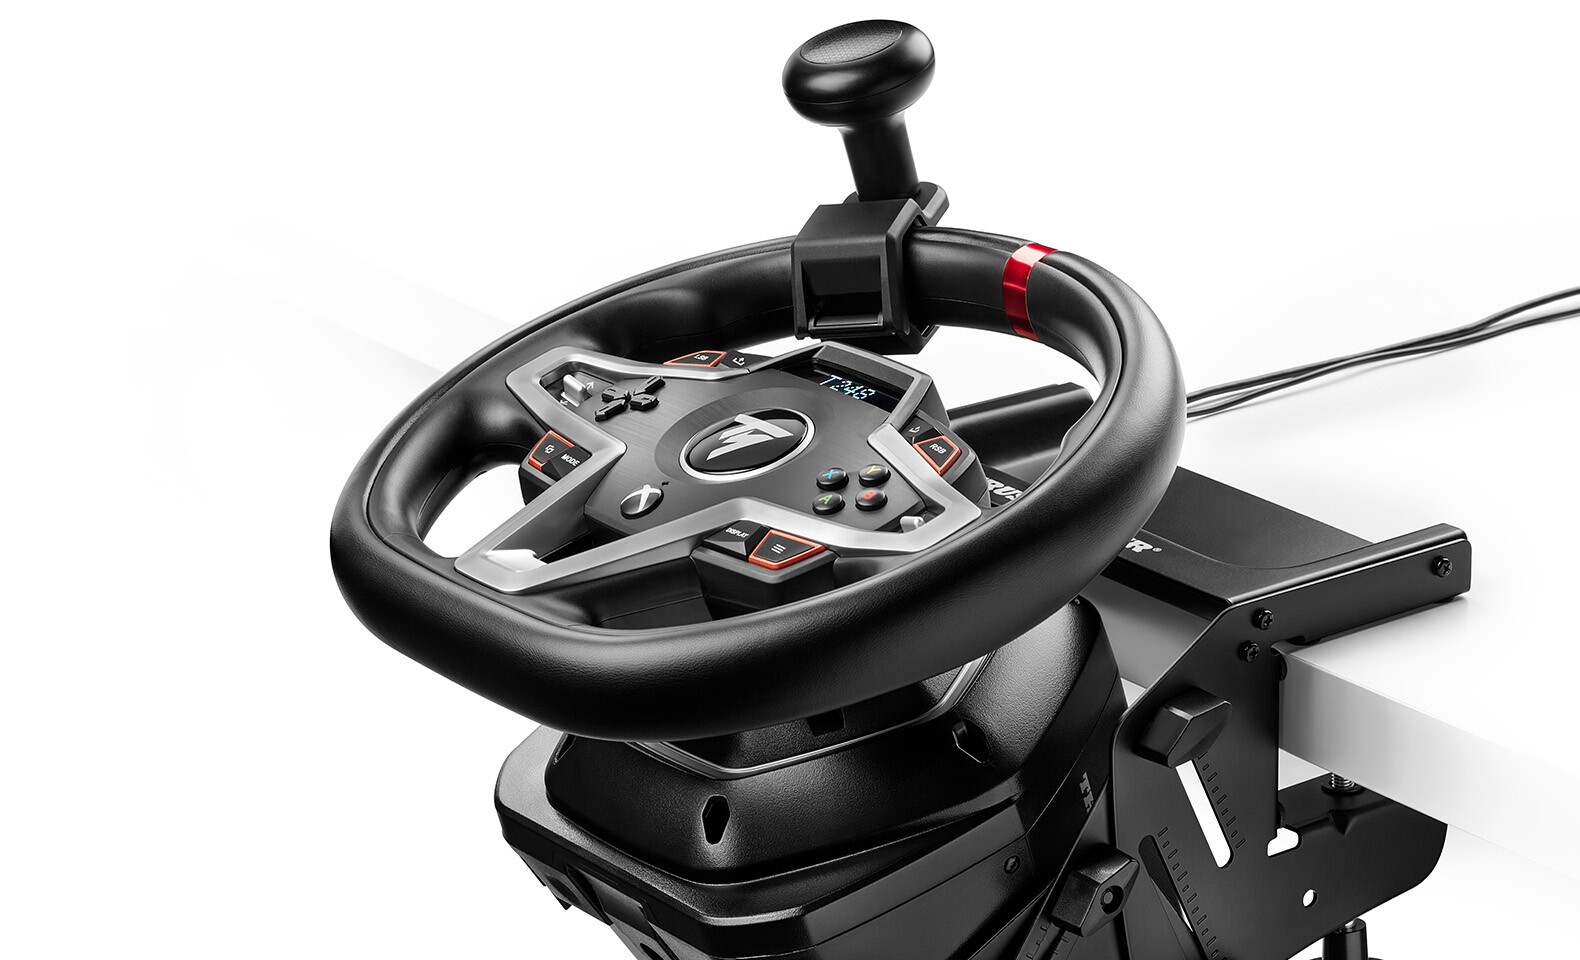 Thrustmaster launches sub $200 T128 force feedback racing wheel